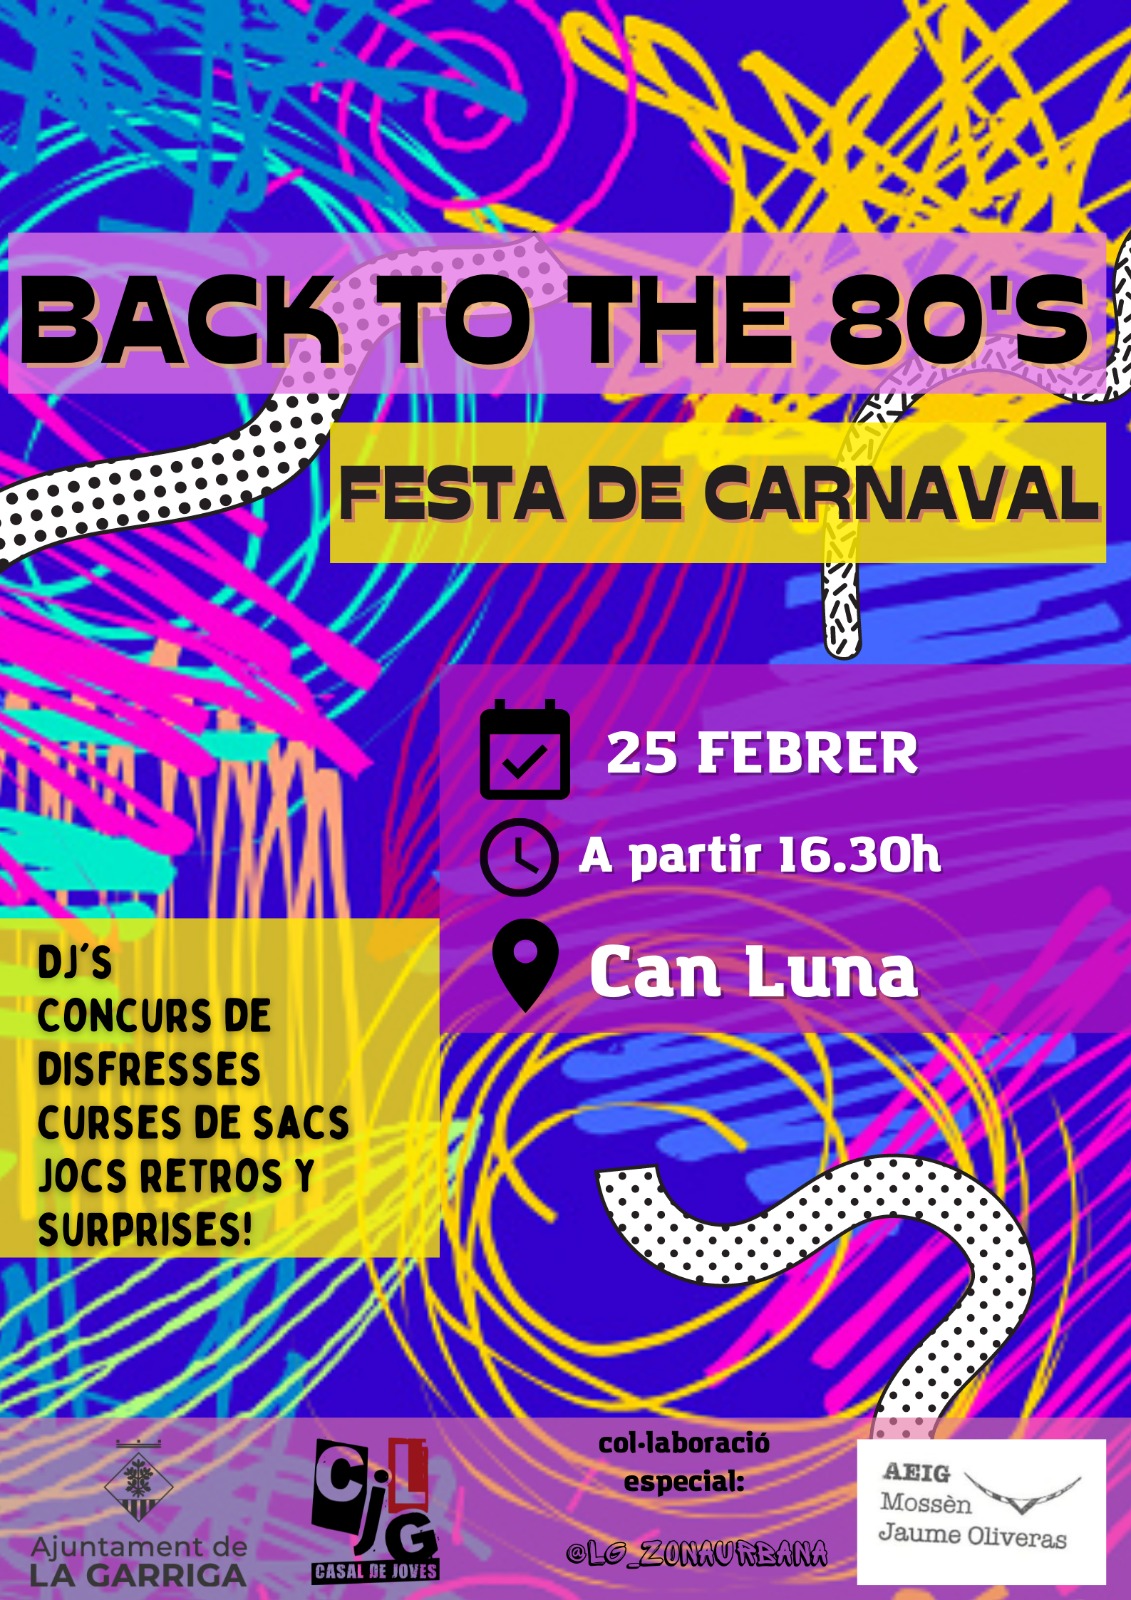 Festa de Carnaval Back to the 80's